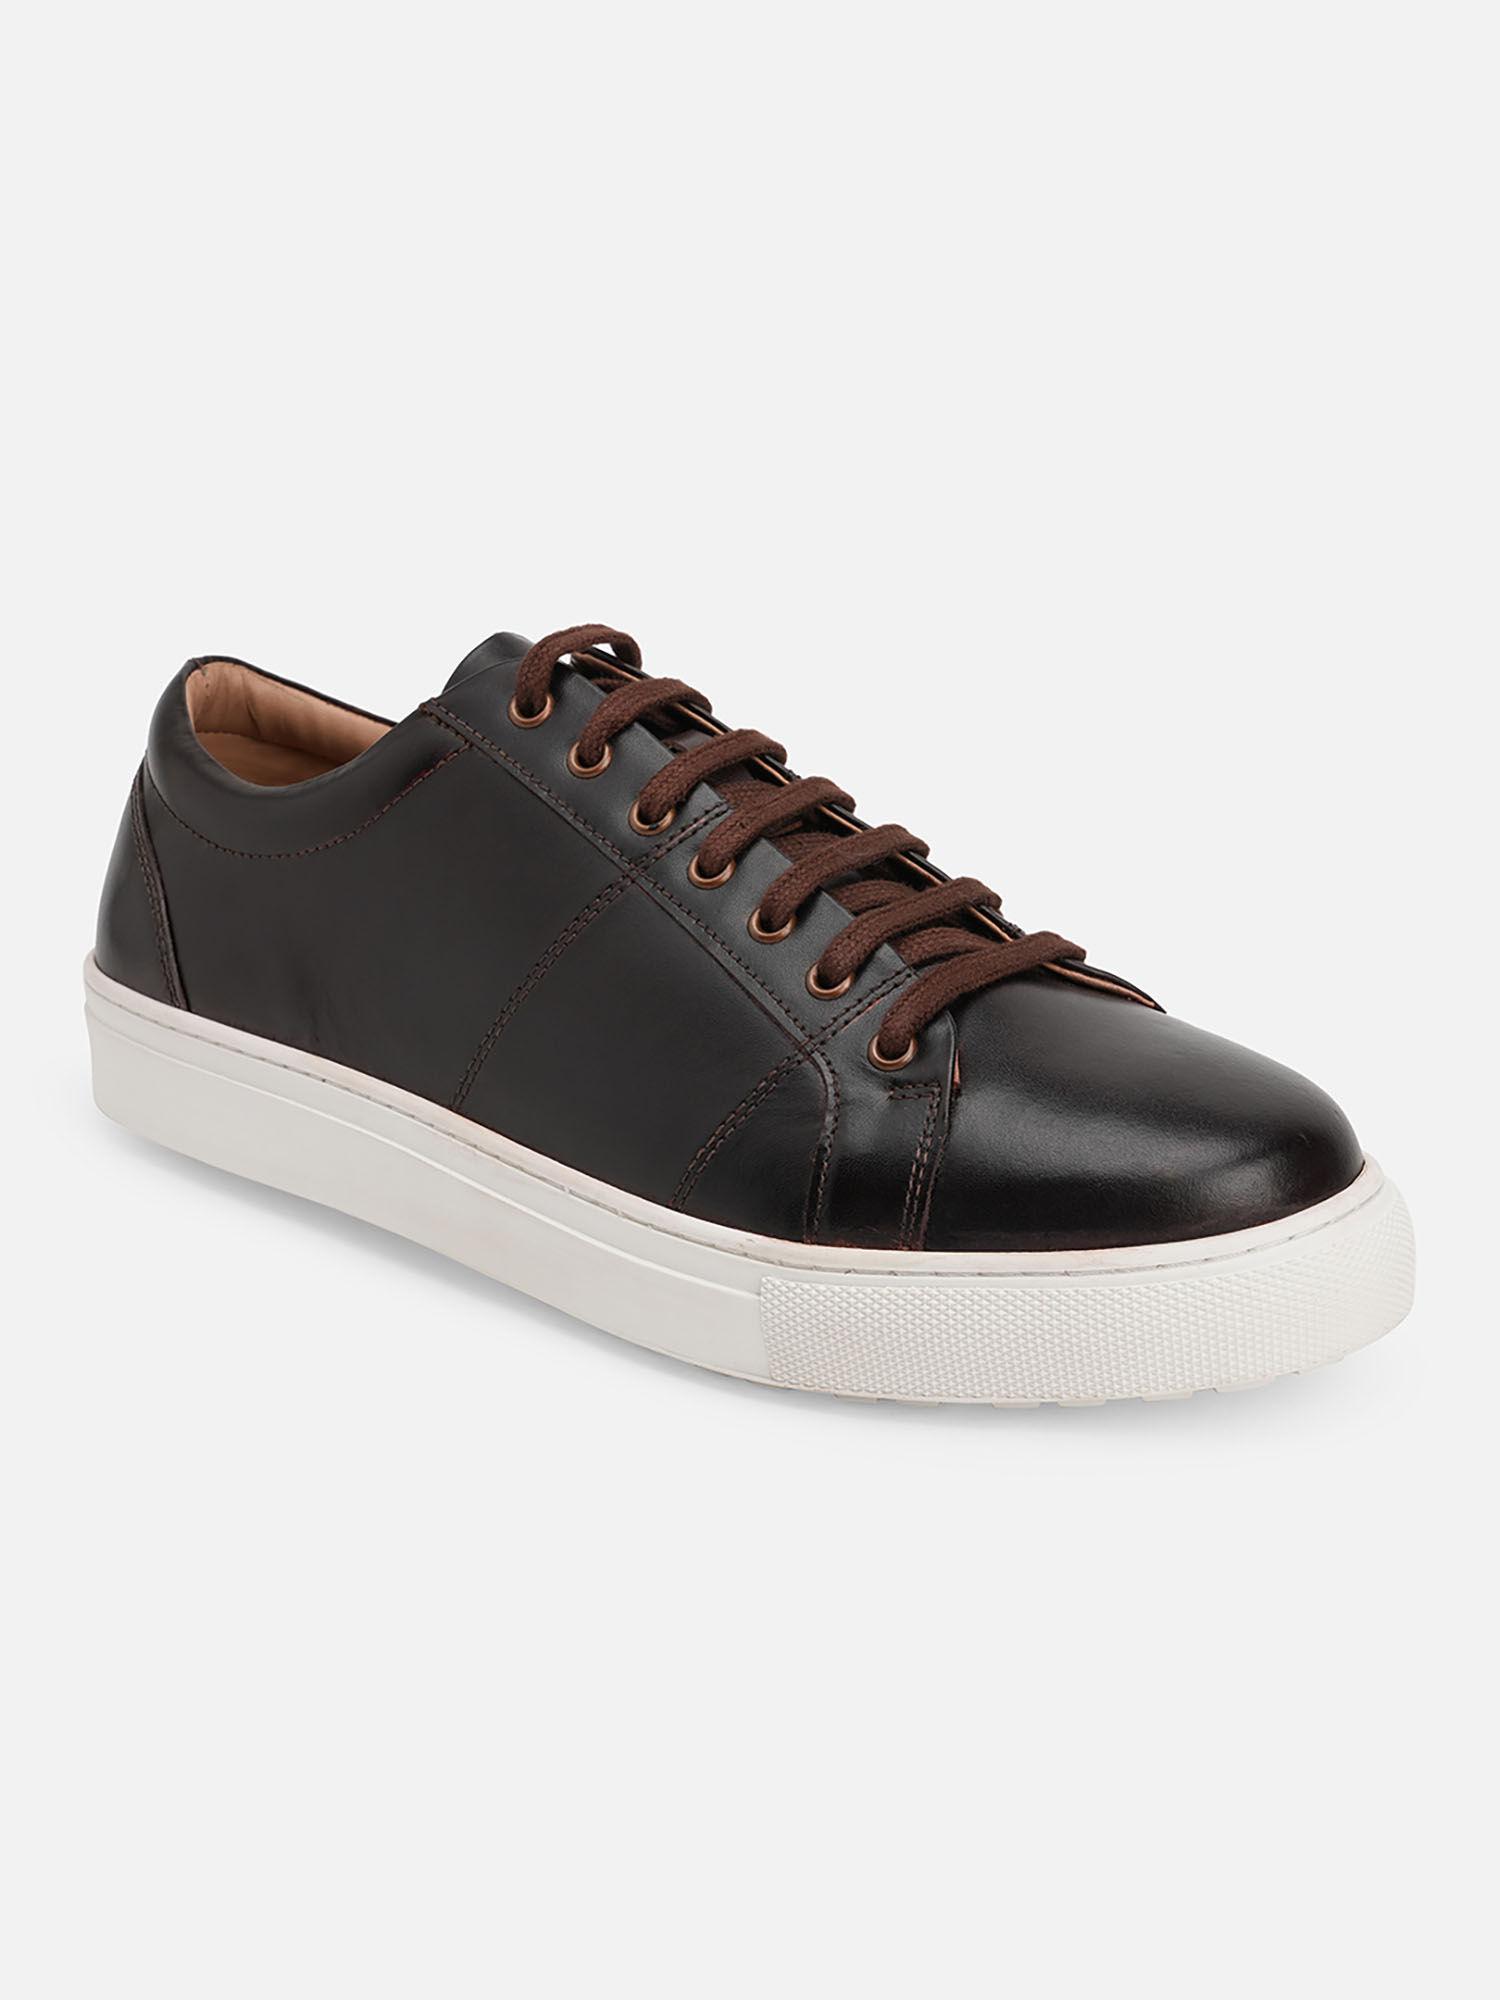 men brown genuine leather casual sneaker